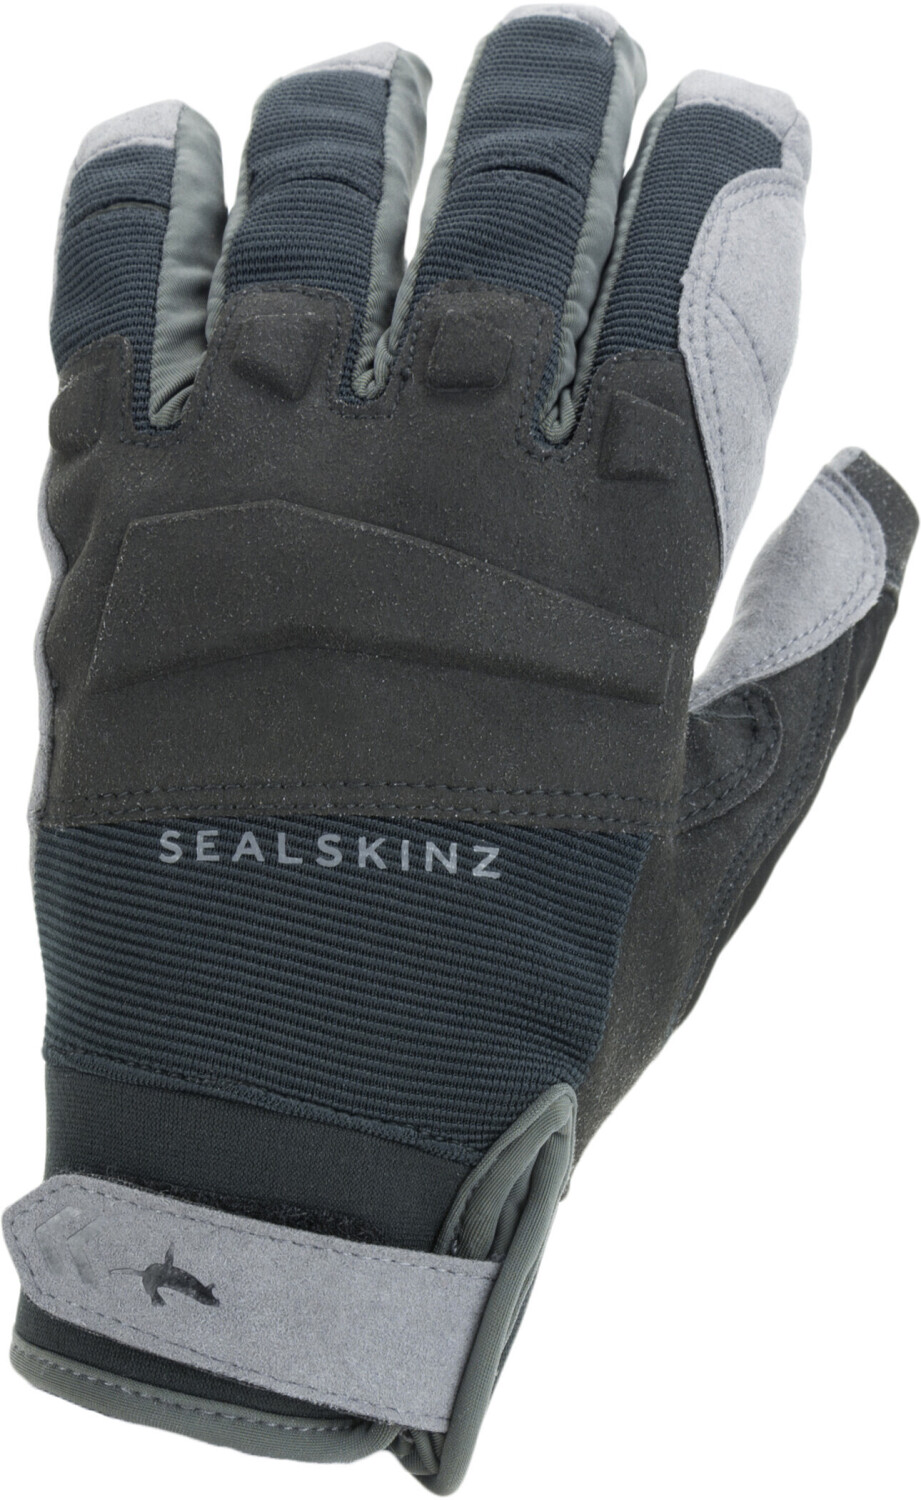 Photos - Cycling Gloves Sealskin Sealskin Waterproof All Weather MTB Gloves black/grey